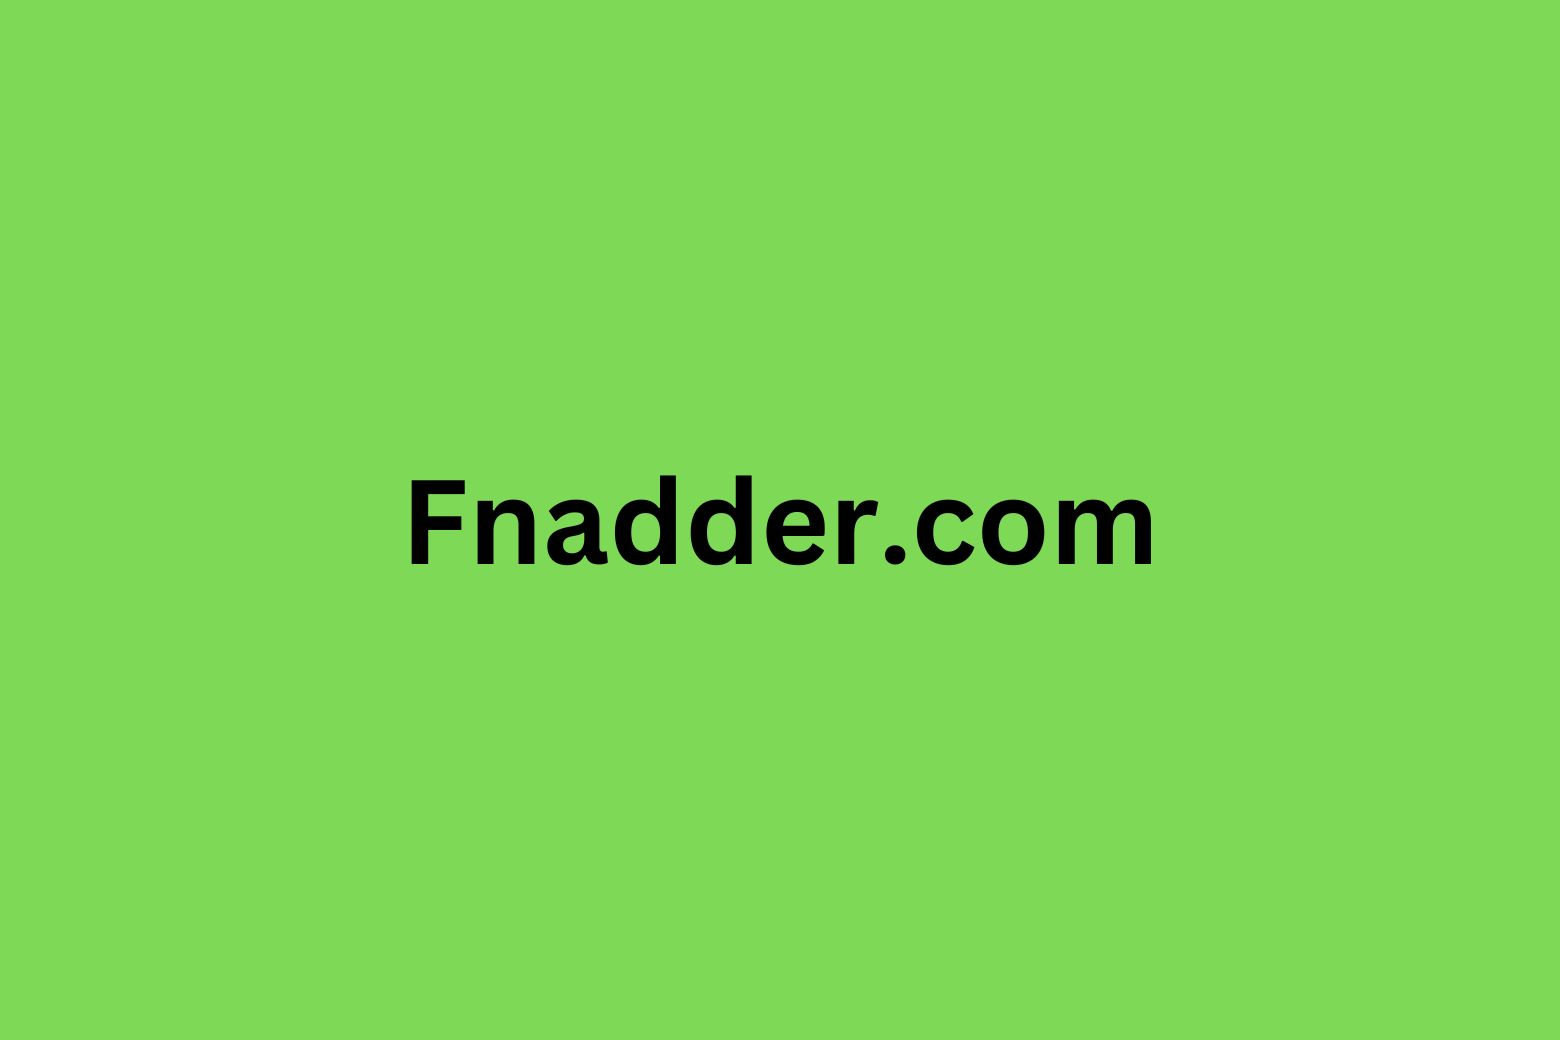 fnadder.com